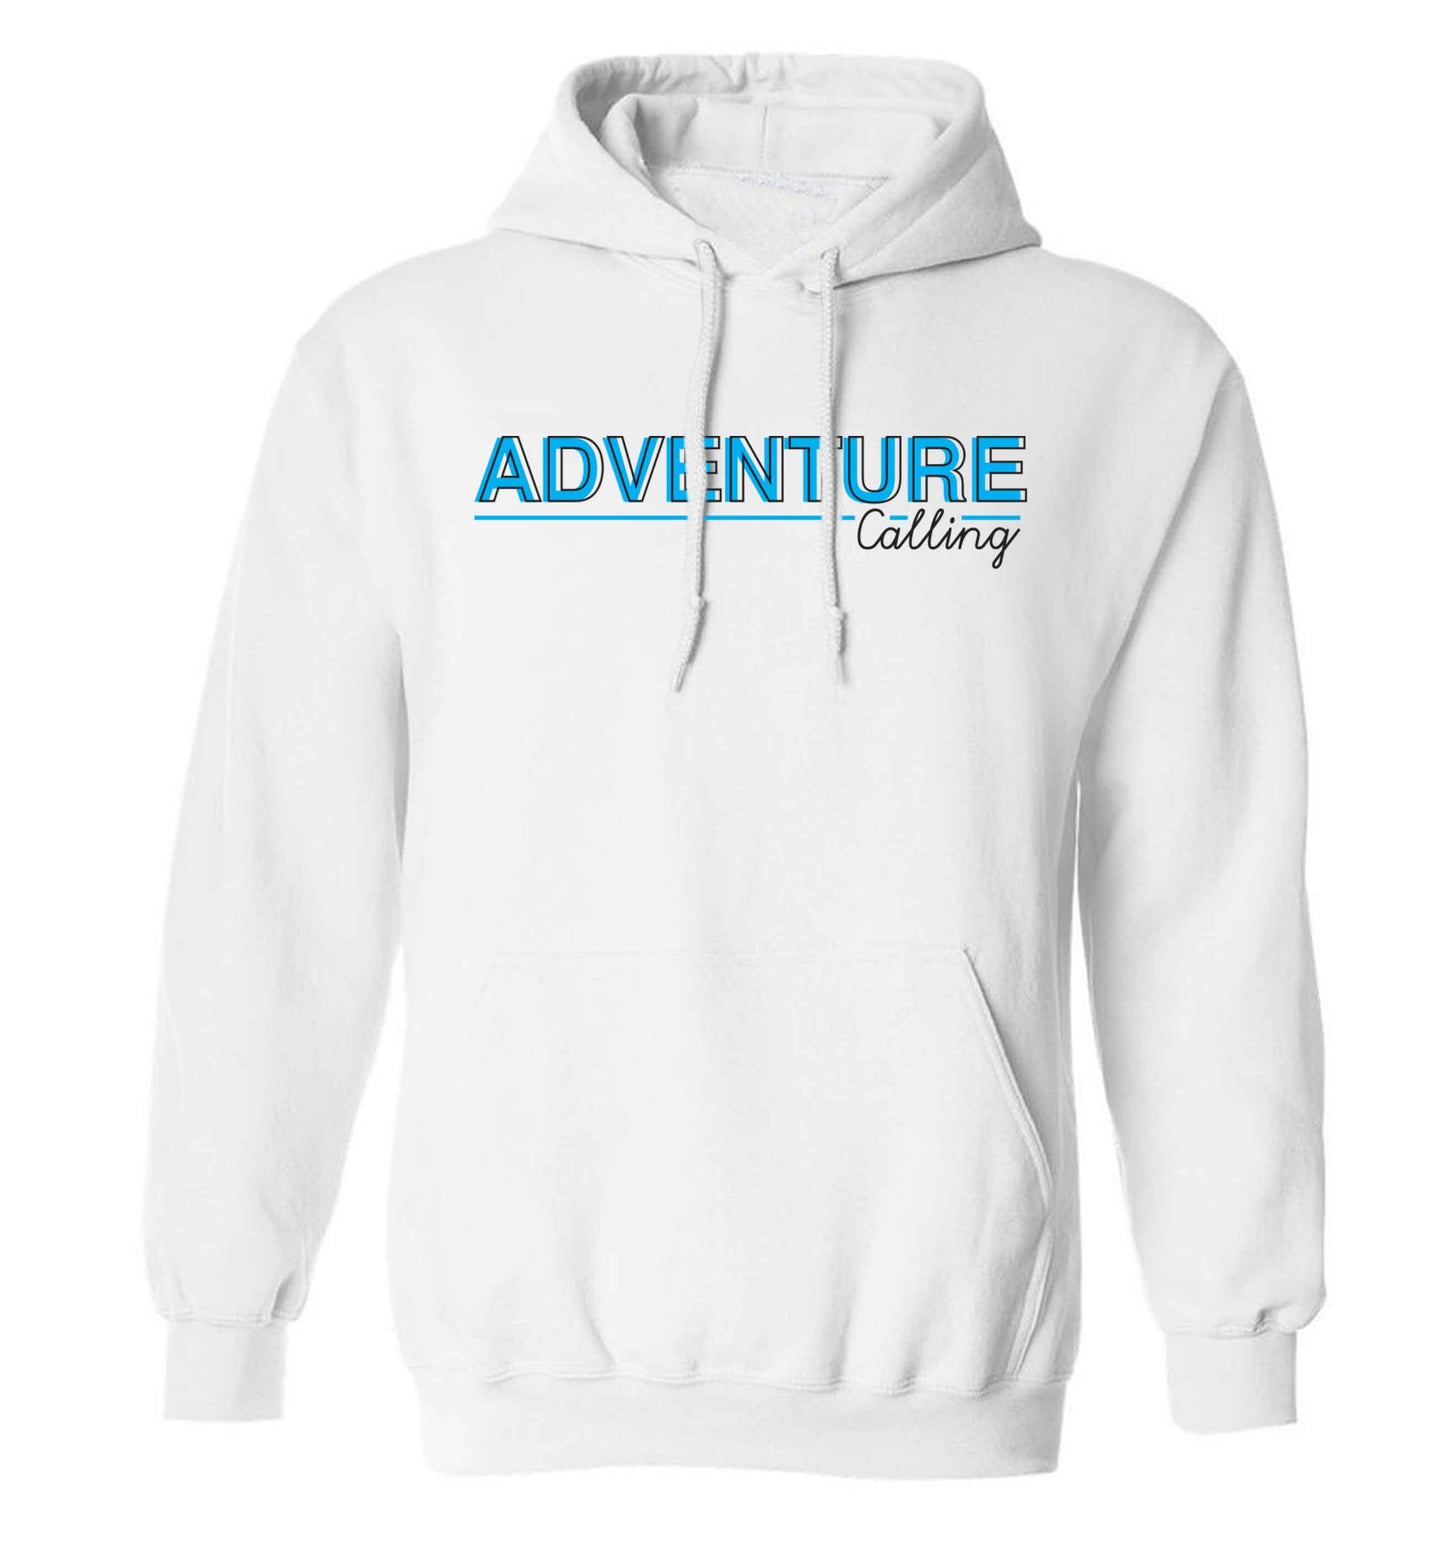 Adventure calling adults unisex white hoodie 2XL